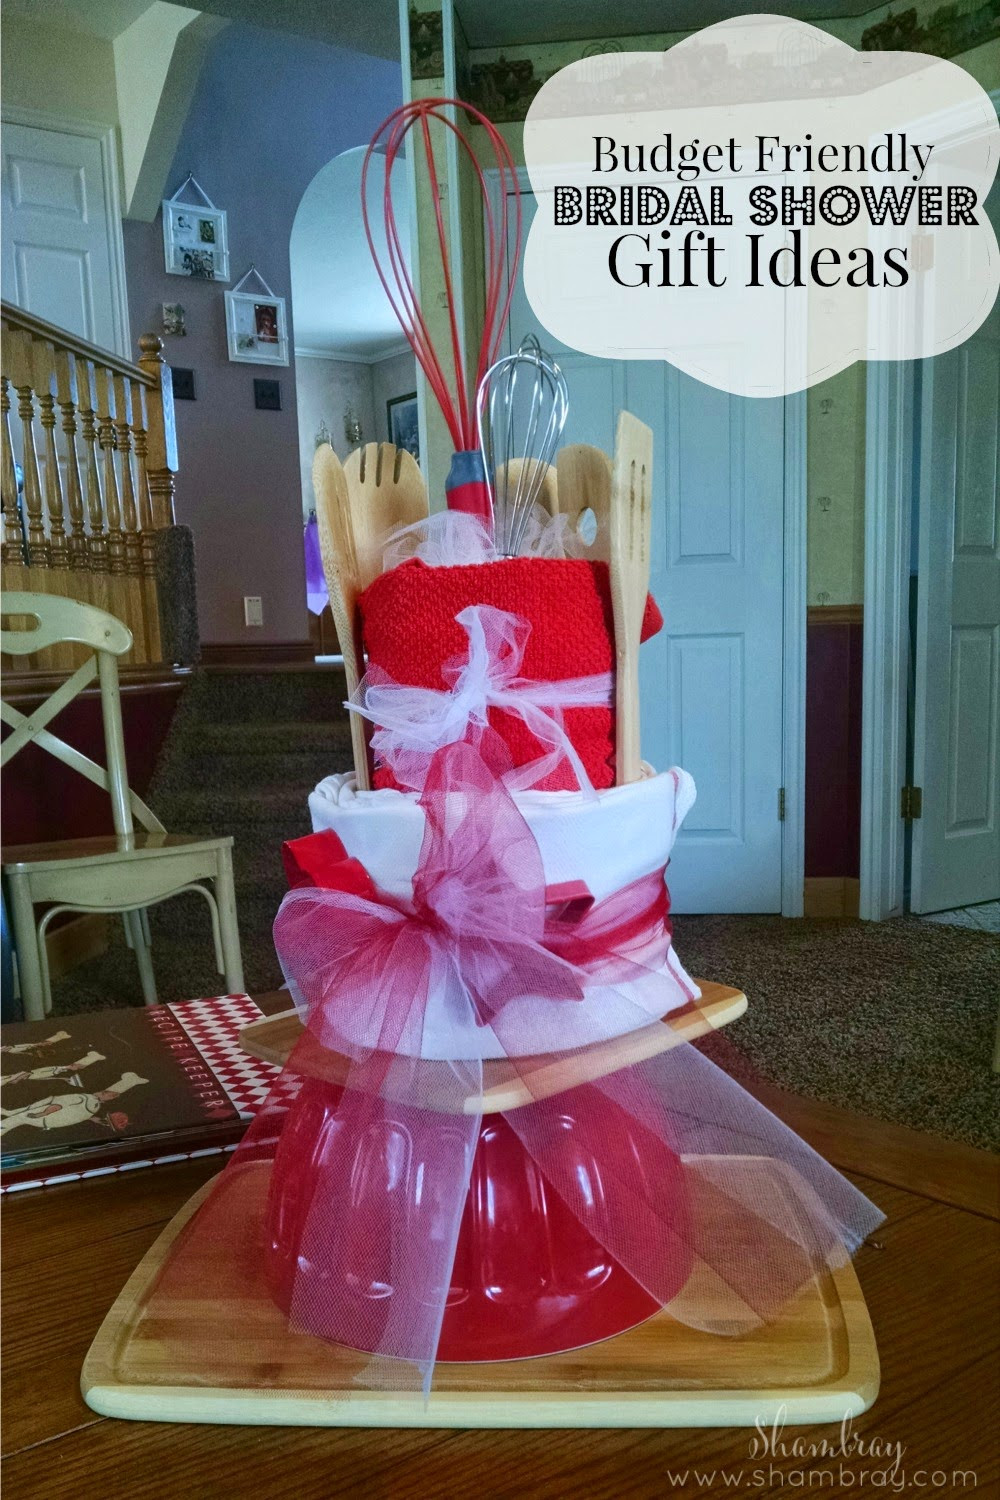 Ideas For Wedding Shower Gift
 Shambray Bud Friendly Bridal Shower Gift Ideas